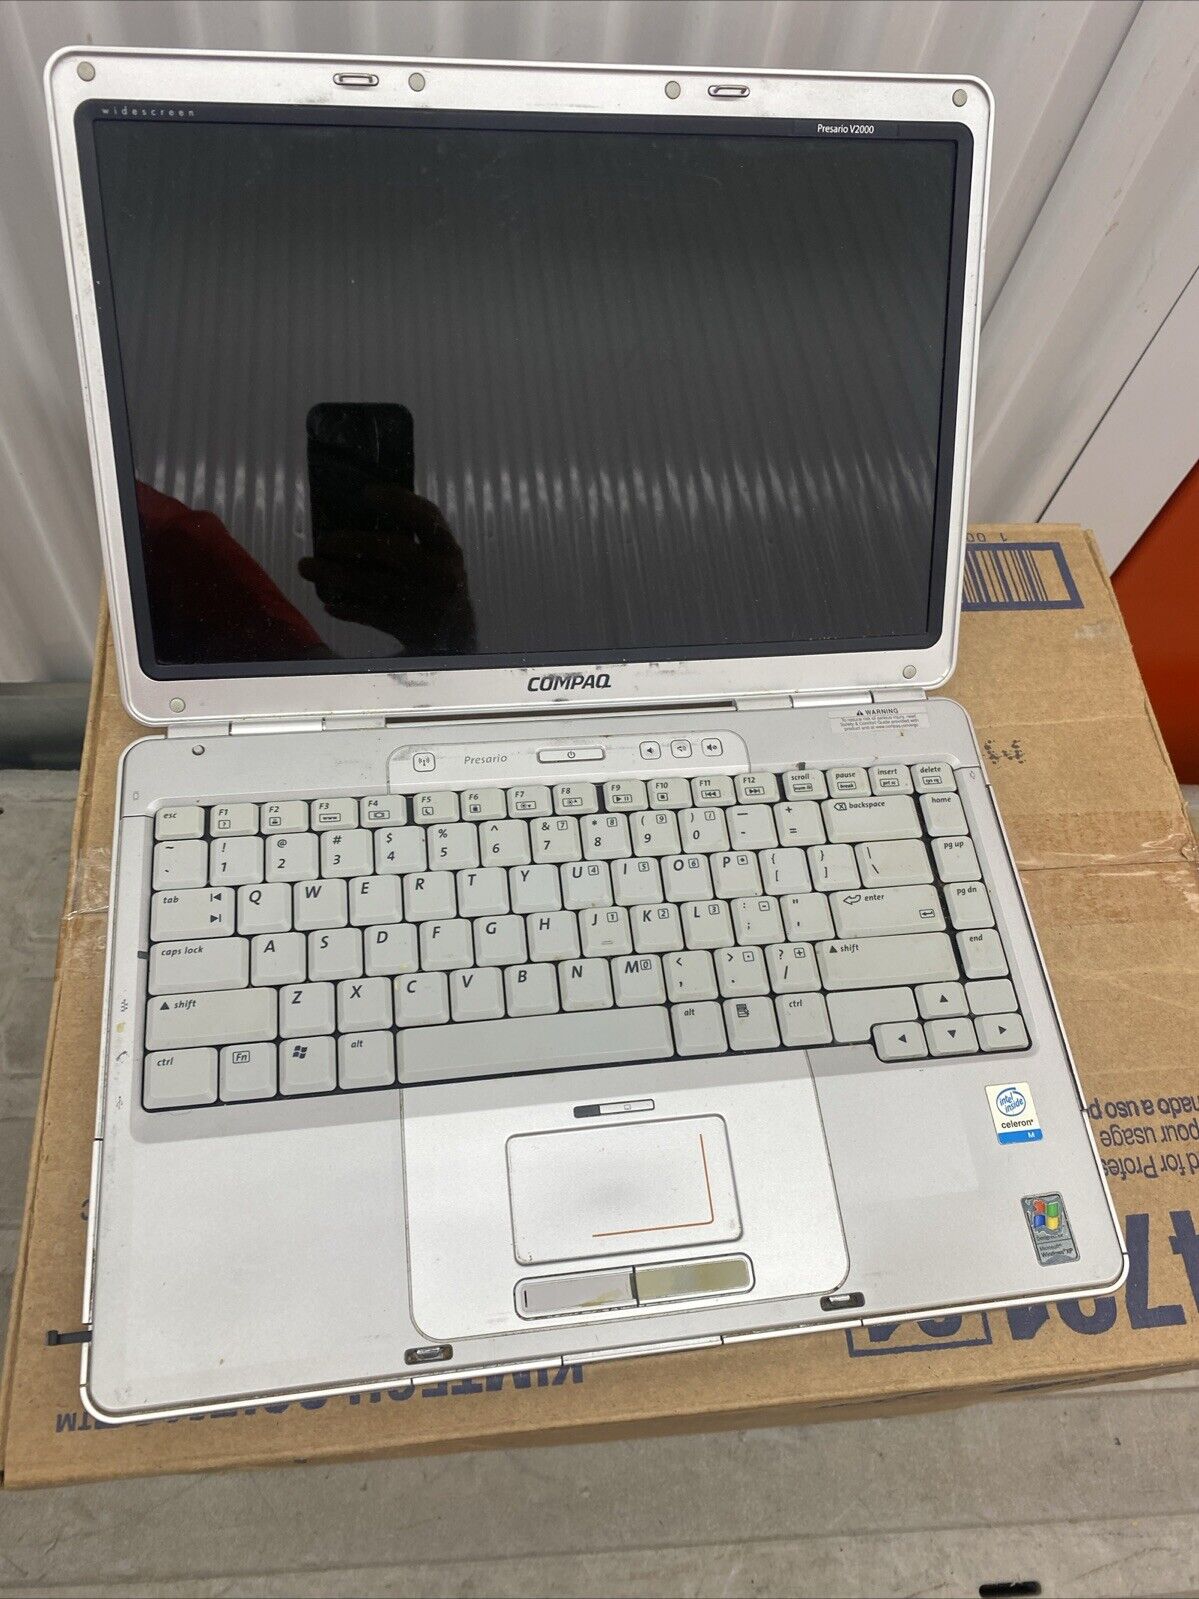 Compaq Presario V2000 Microsoft Windows XP Home 14.1” Laptop UNTESTED